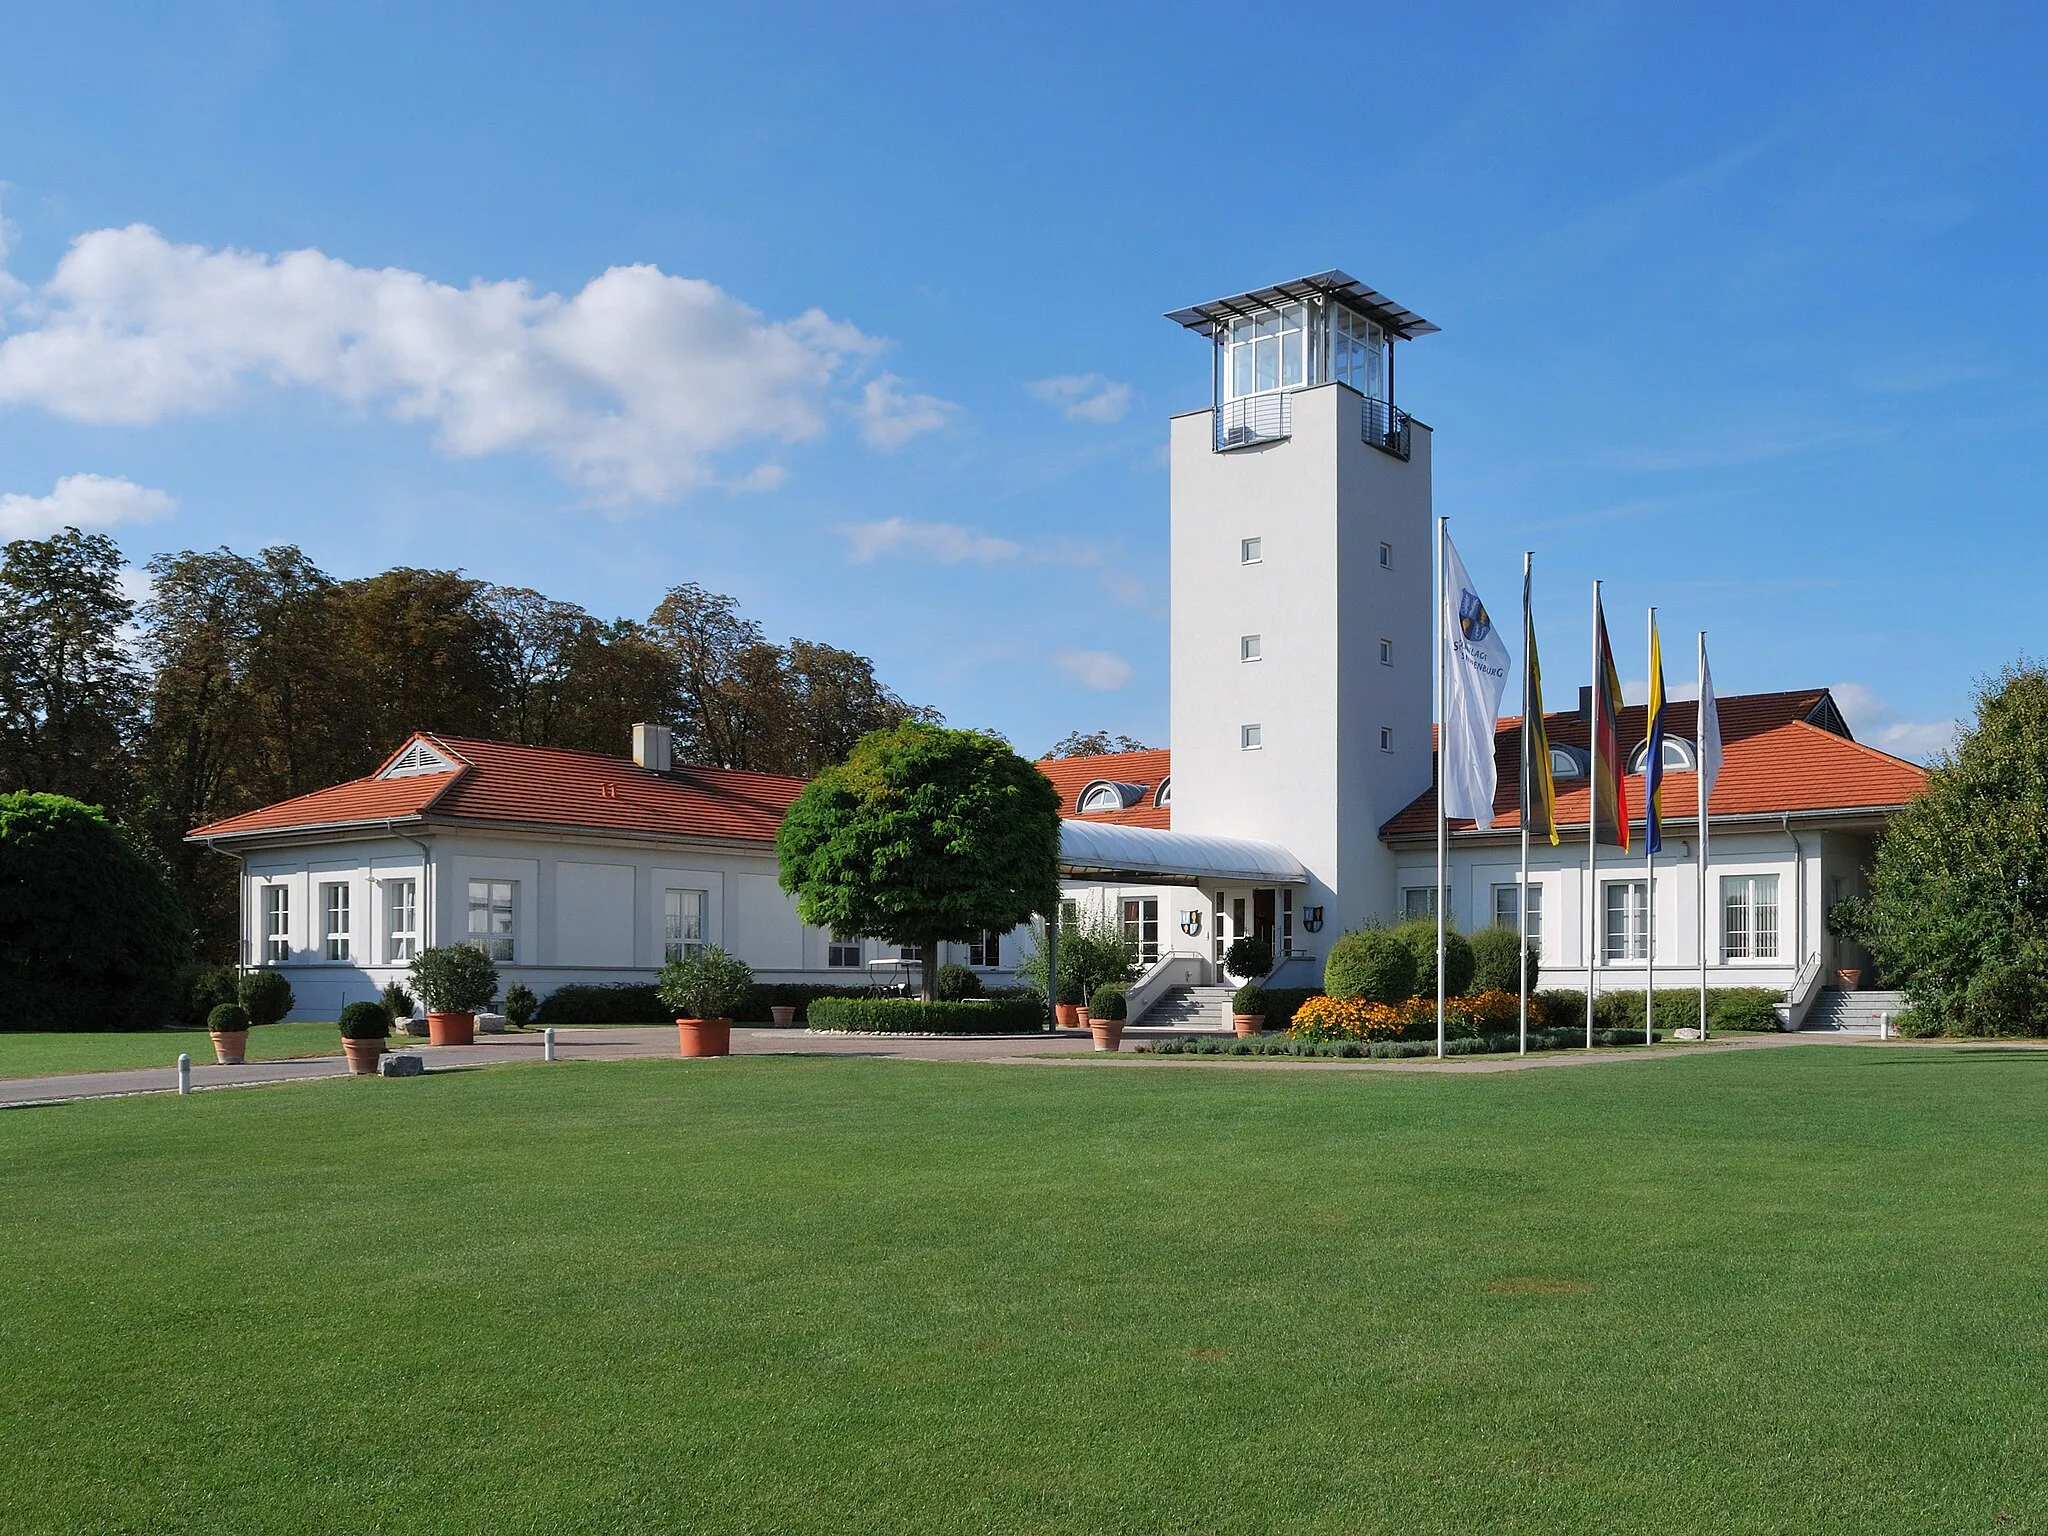 Photo showing: Club house of the golf course Schloss Nippenburg in Schwieberdingen near Stuttgart in Southern Germany.